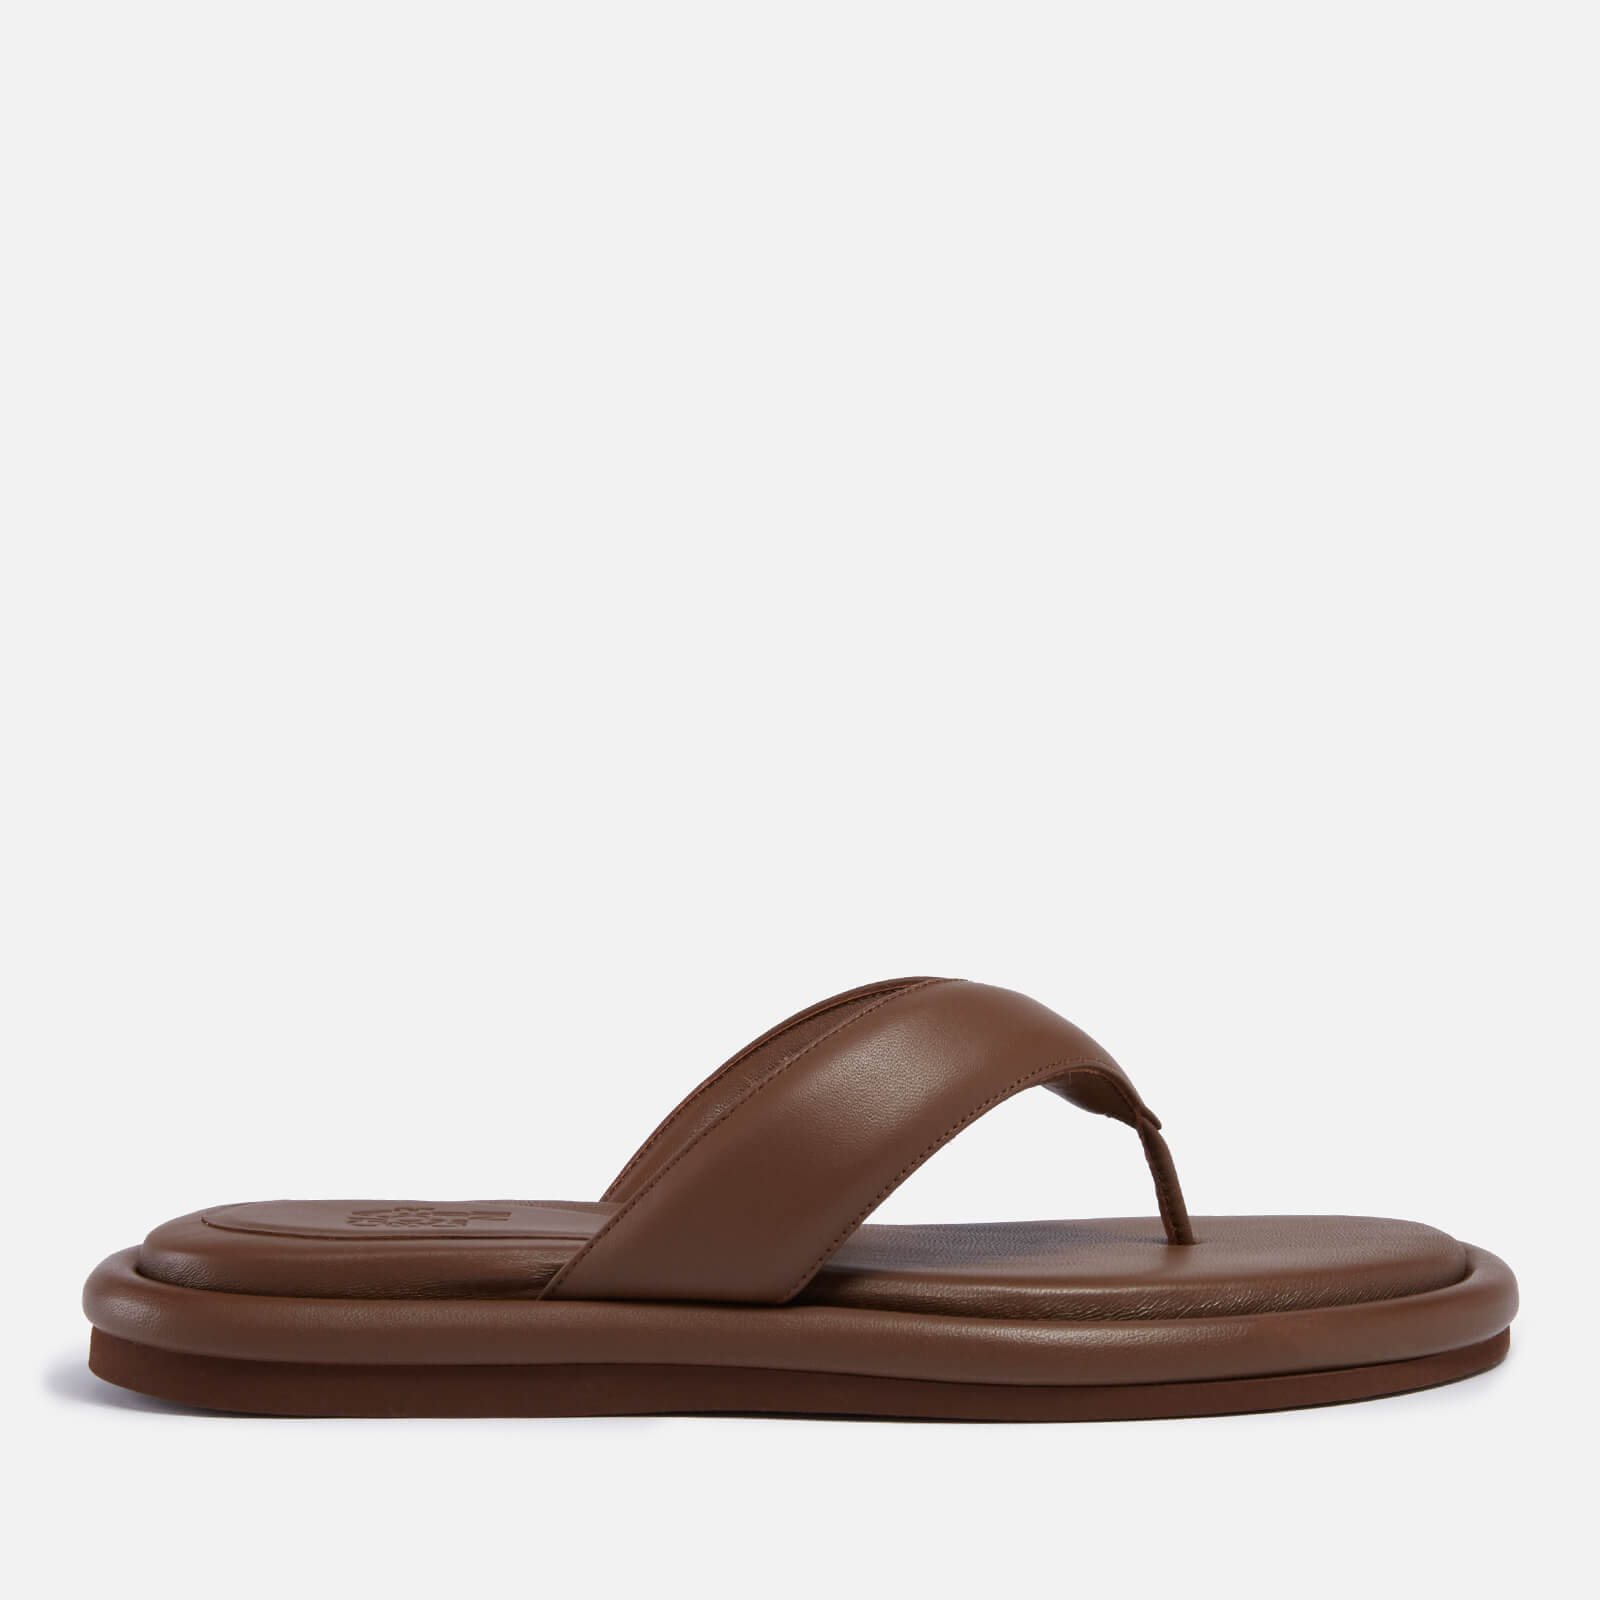 GIABORGHINI Women's Gia 5 Leather Toe Post Sandals - Coffee Brown - IT 37